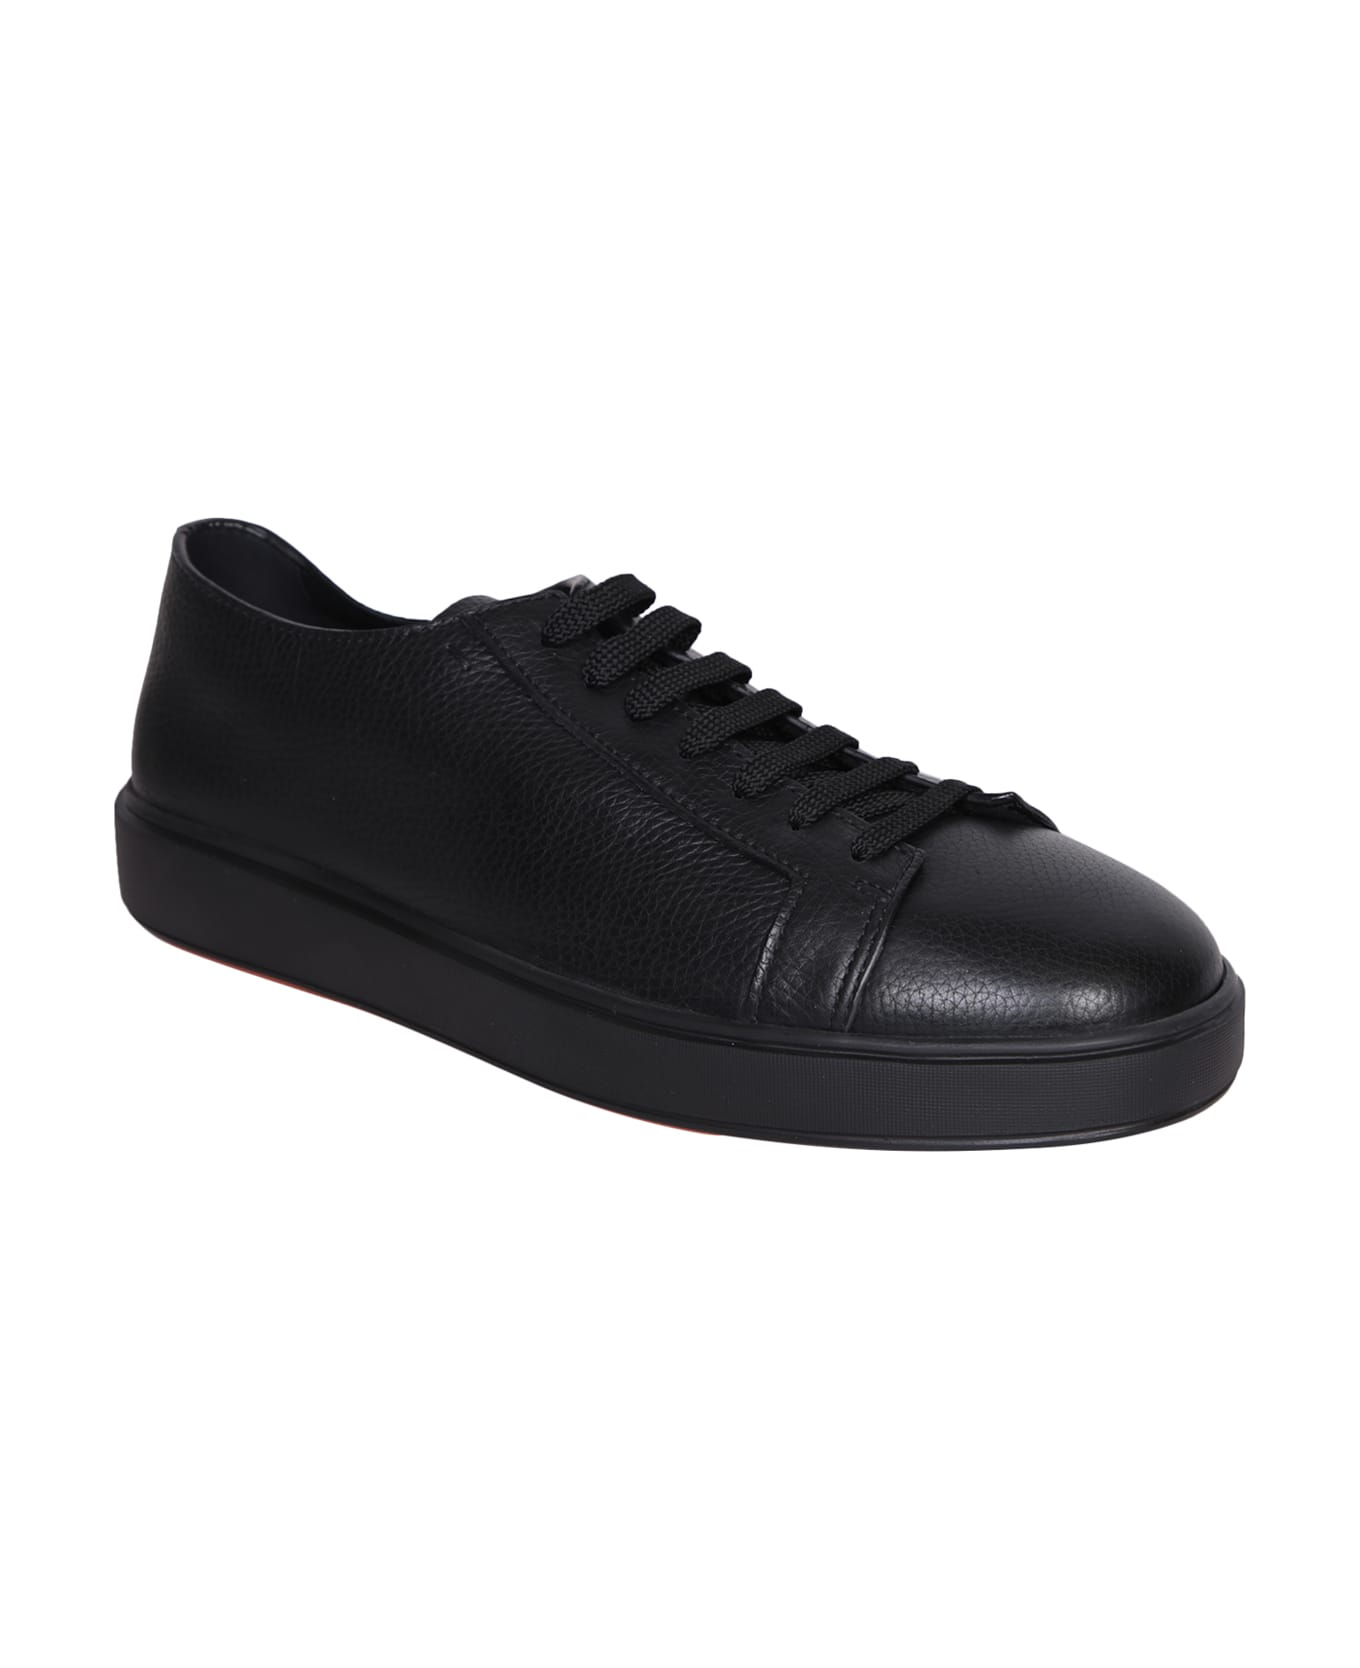 Santoni Cleanic Black Sneakers - Black